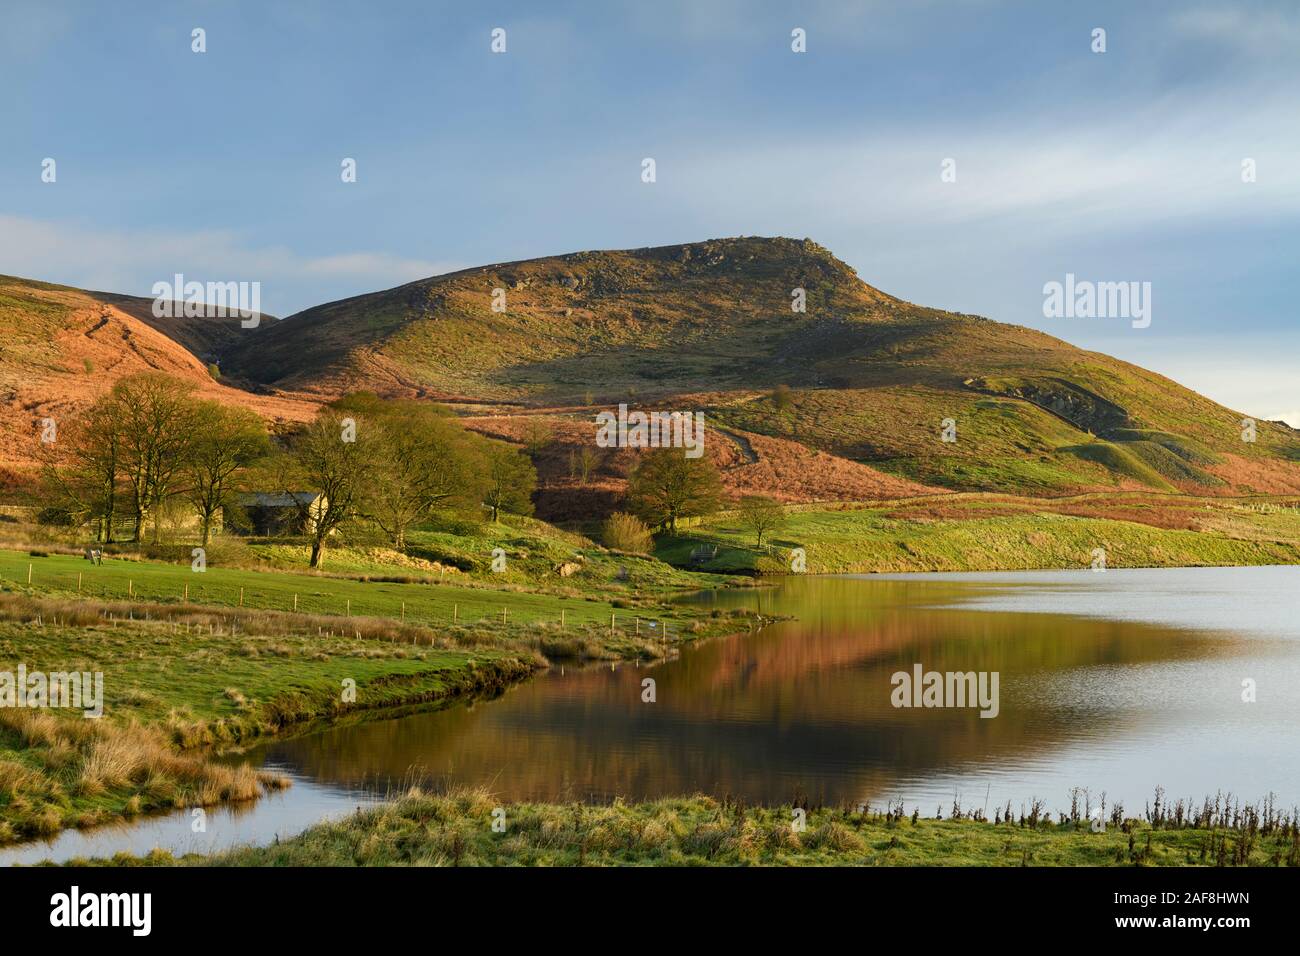 Mañana escénica vista rural (Embsay depósito, empinadas colinas soleadas o moros, cumbre de alta montaña, crag Hill & blue sky) - North Yorkshire, Inglaterra, Reino Unido. Foto de stock